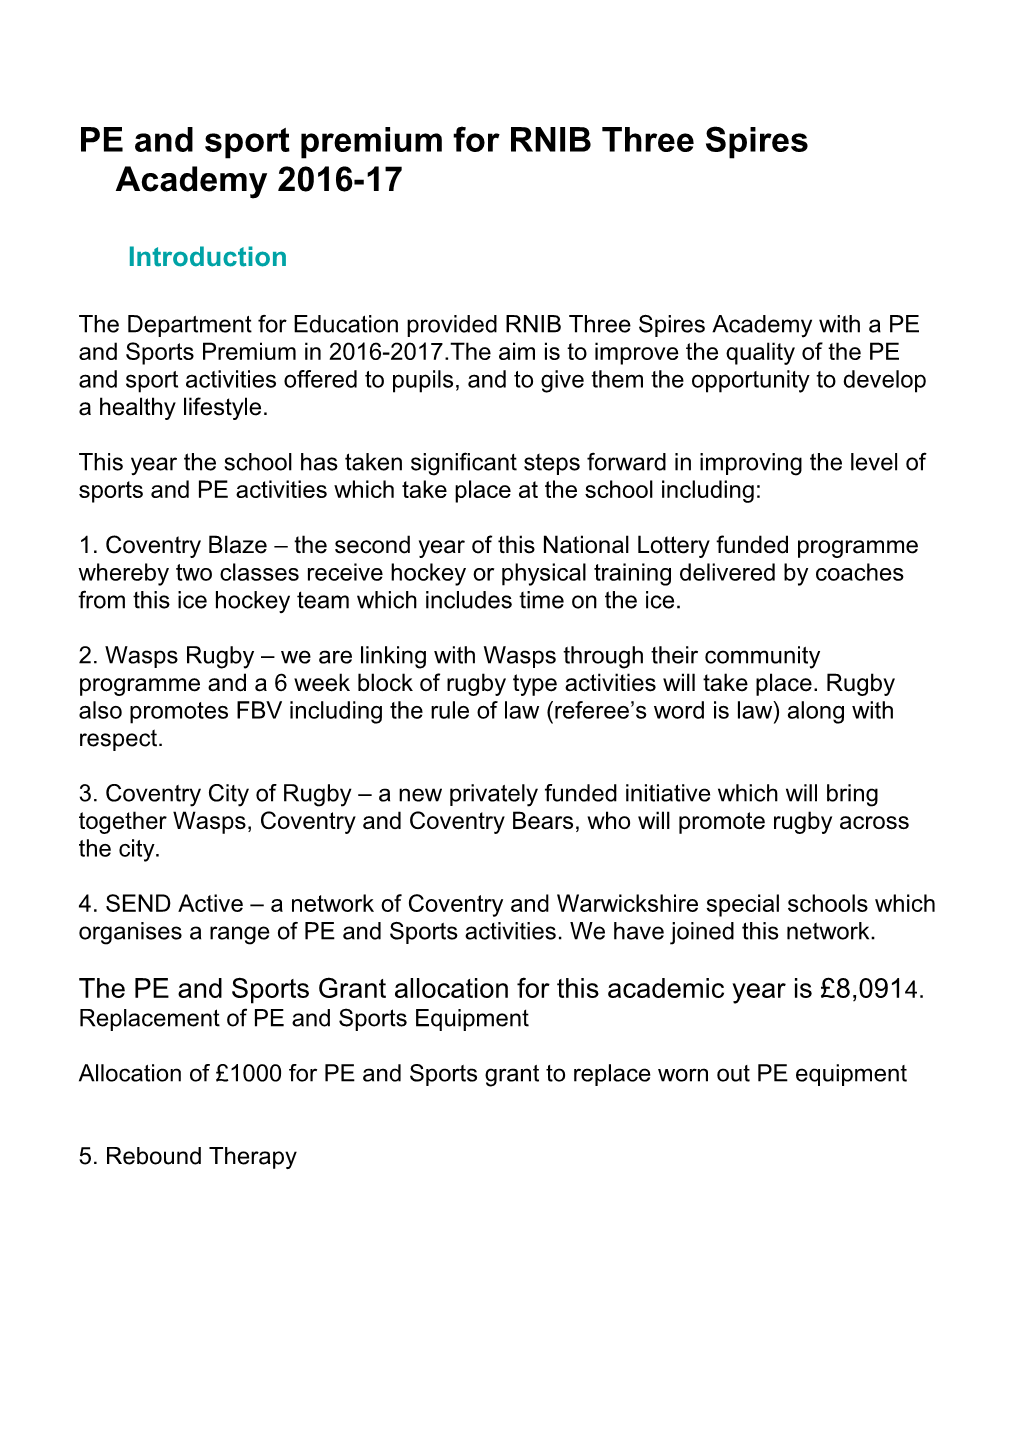 PE and Sport Premium for RNIB Three Spires Academy 2016-17